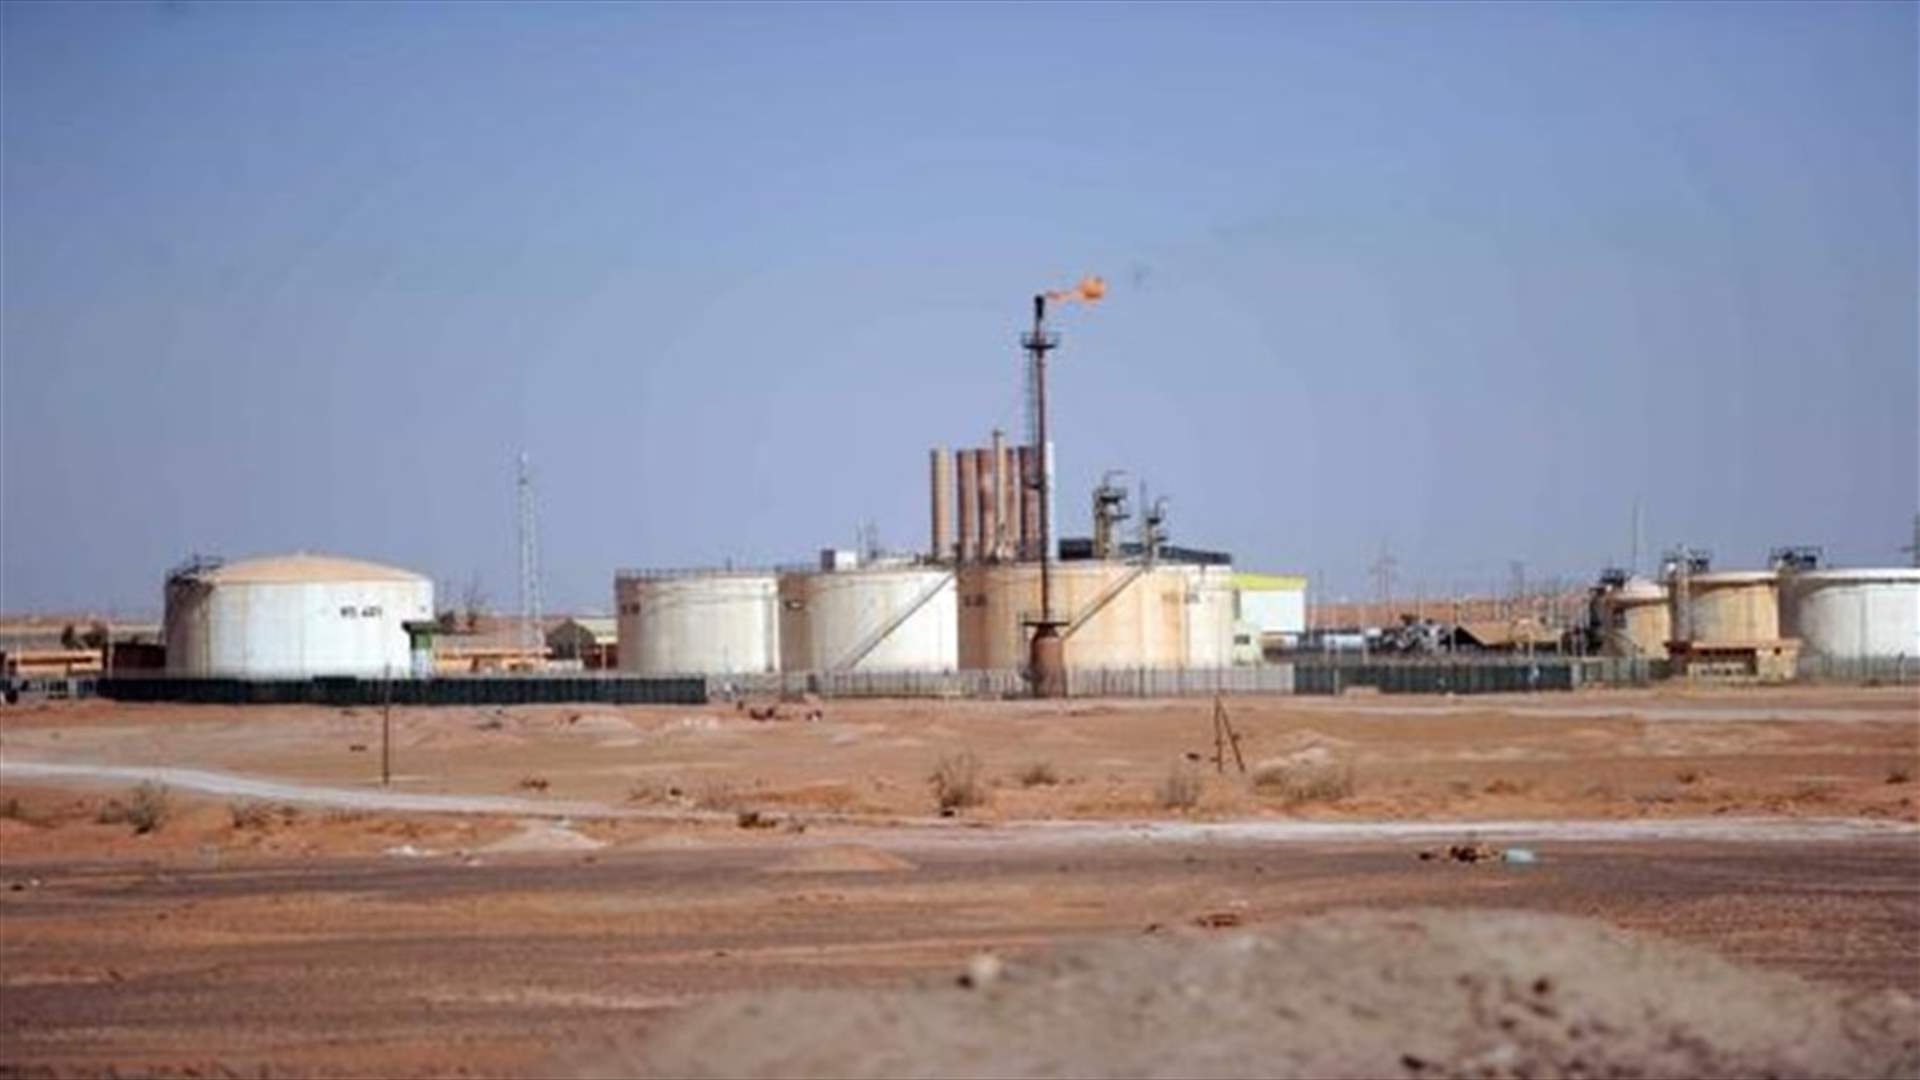 Militants fire rockets at Algerian BP/Statoil gas plant, no casualties